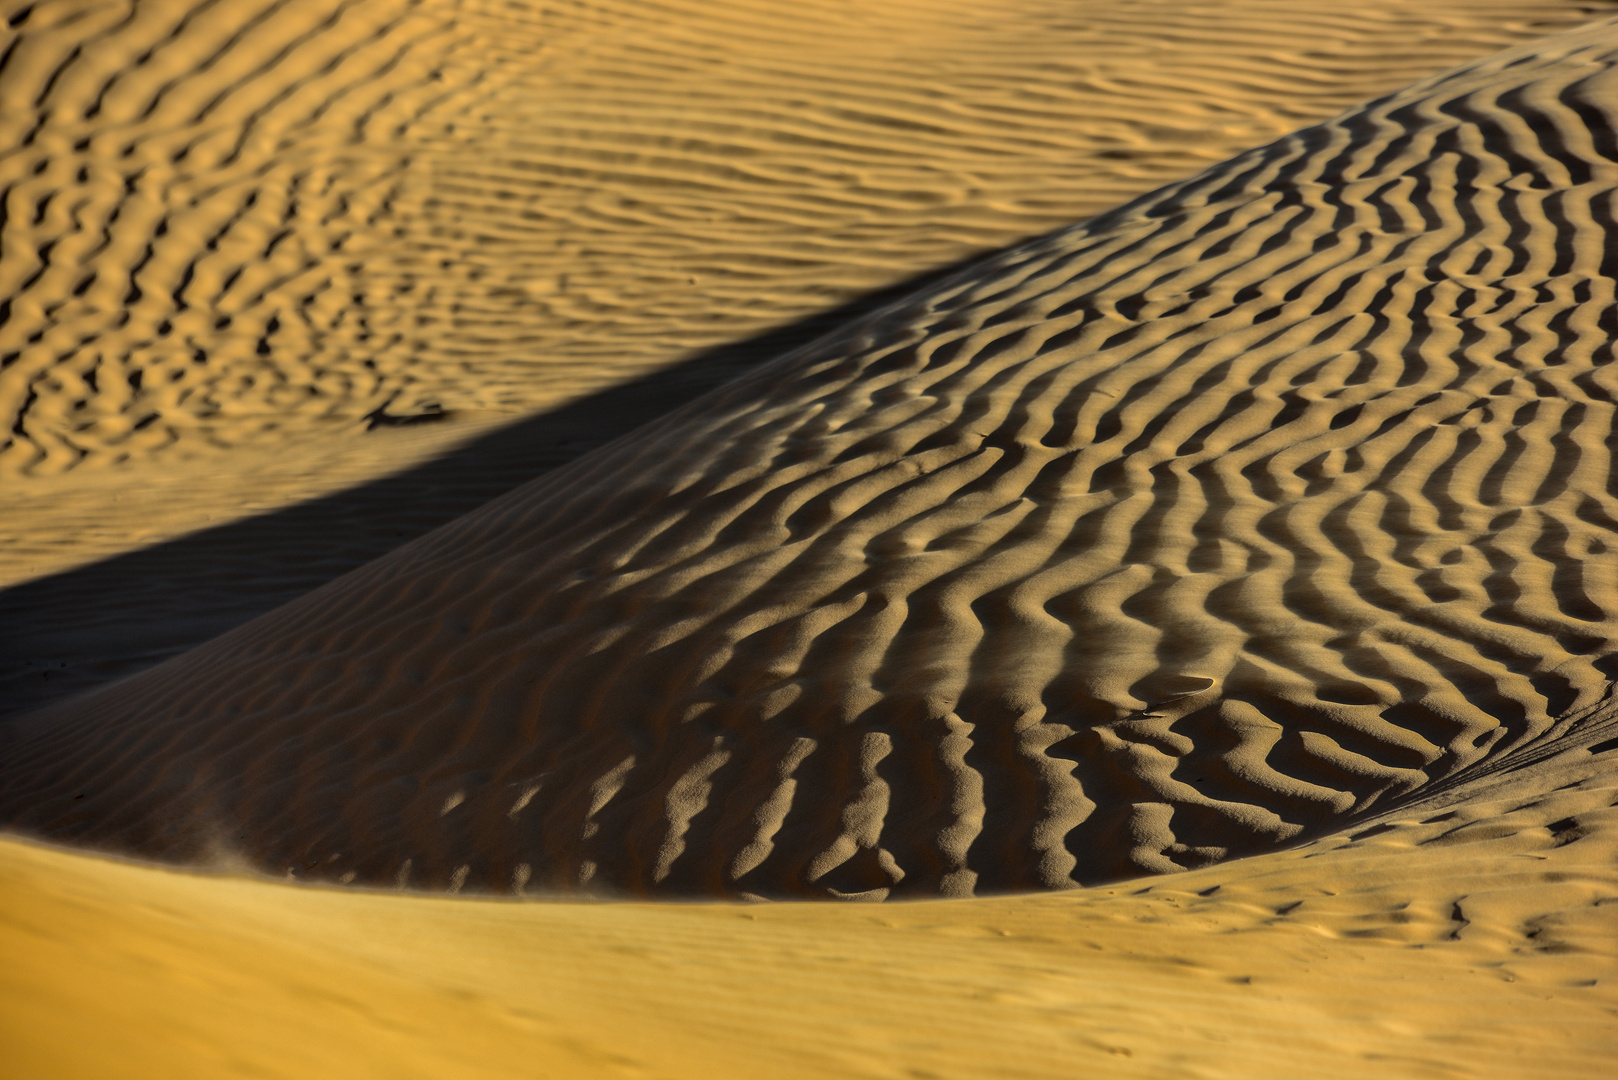 Sandformen